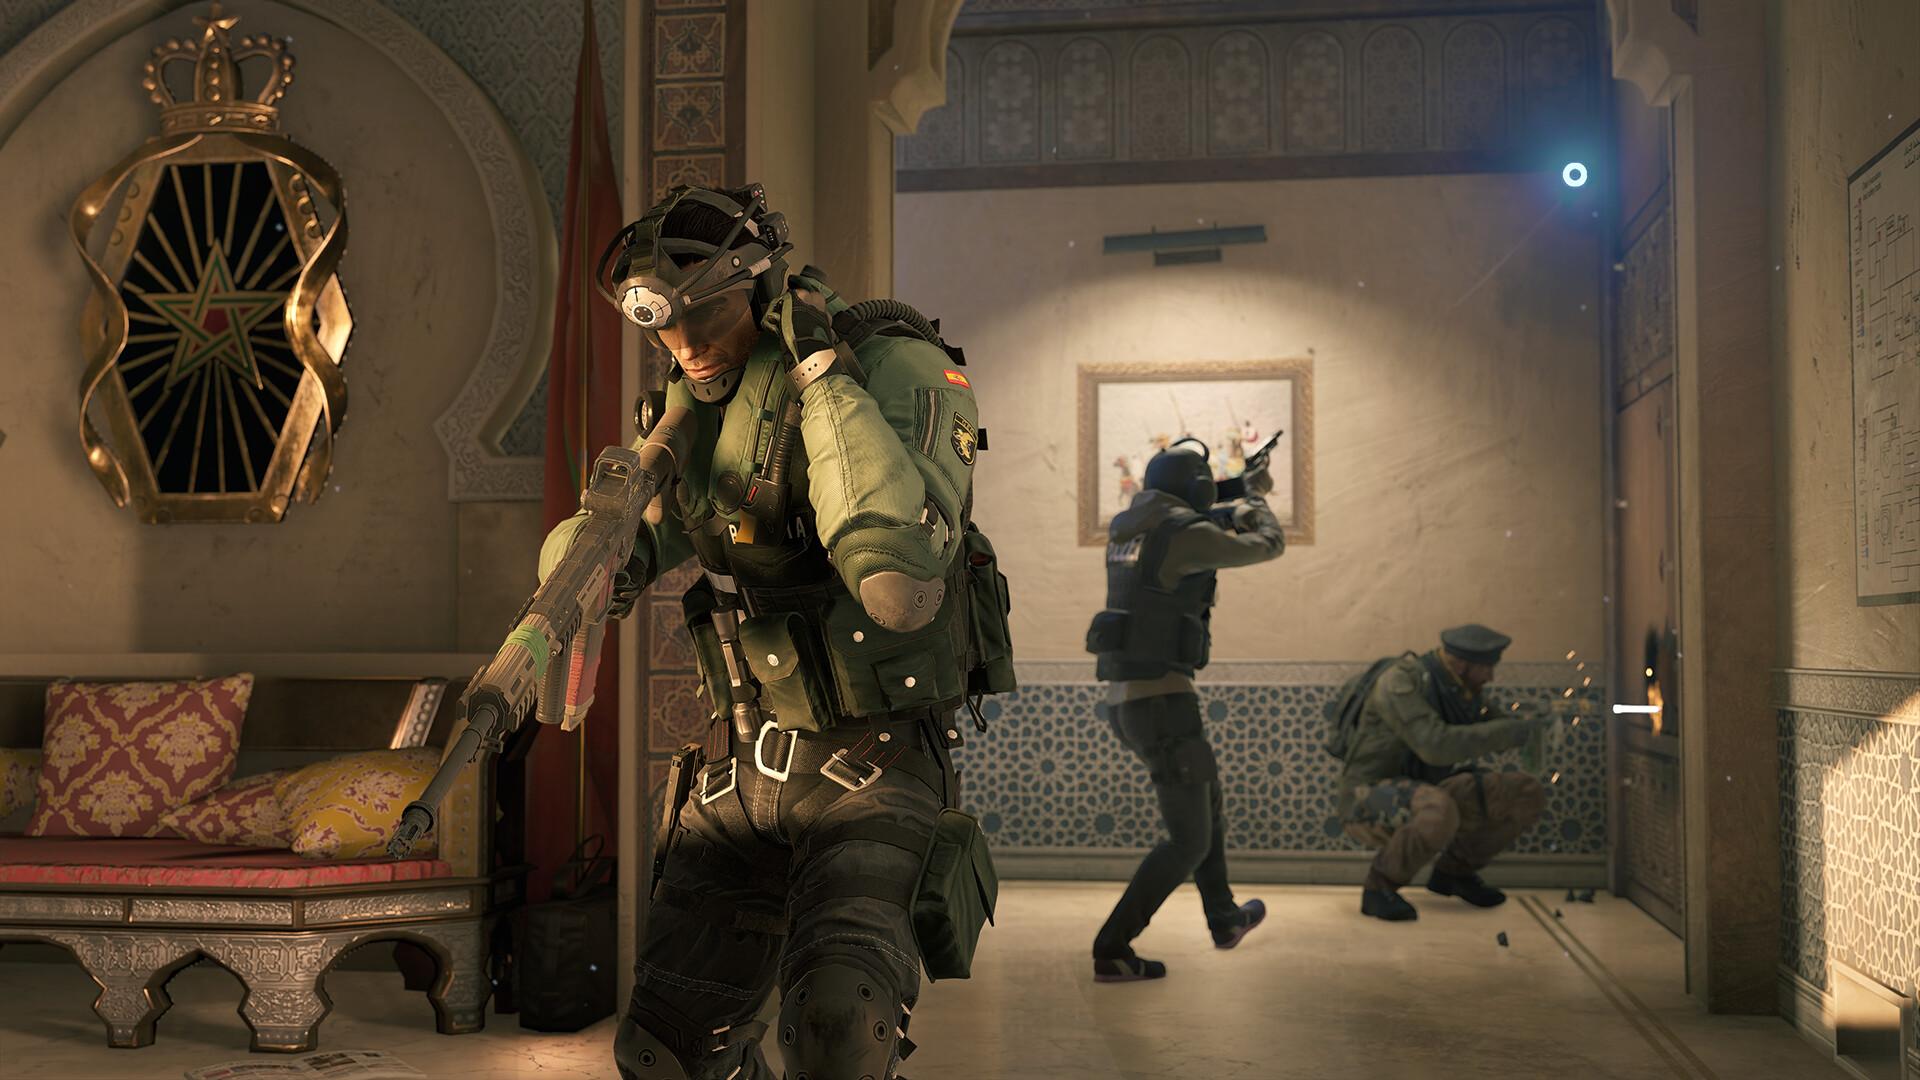 Screenshot №1 from game Tom Clancy's Rainbow Six® Siege